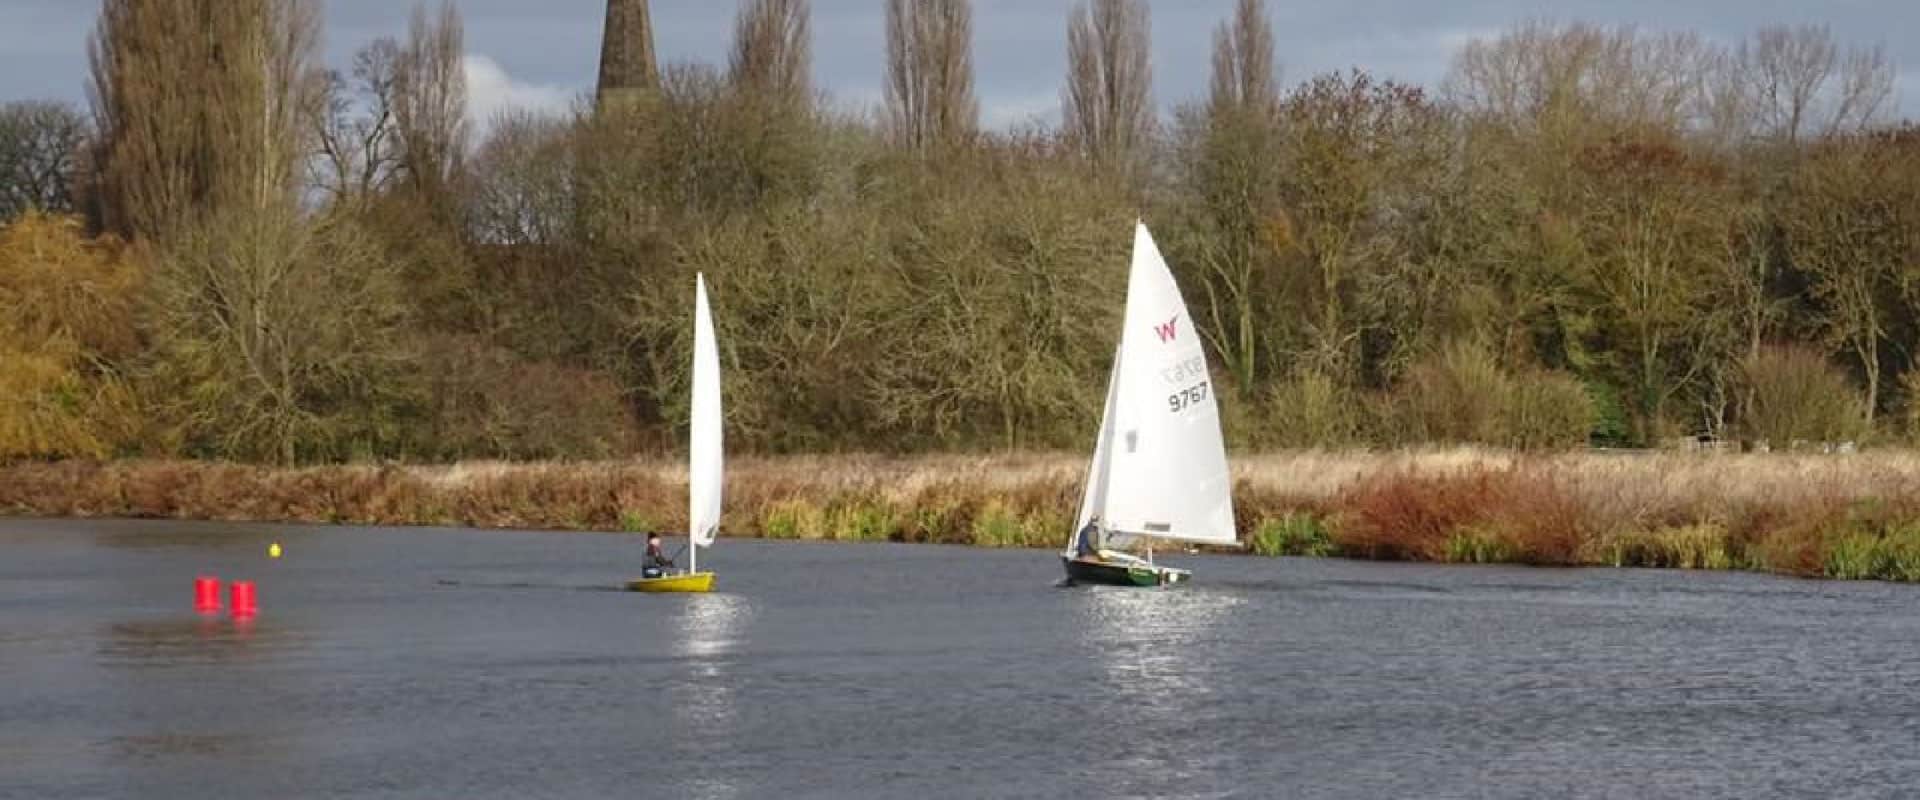 Abbey Sailing Club in UK